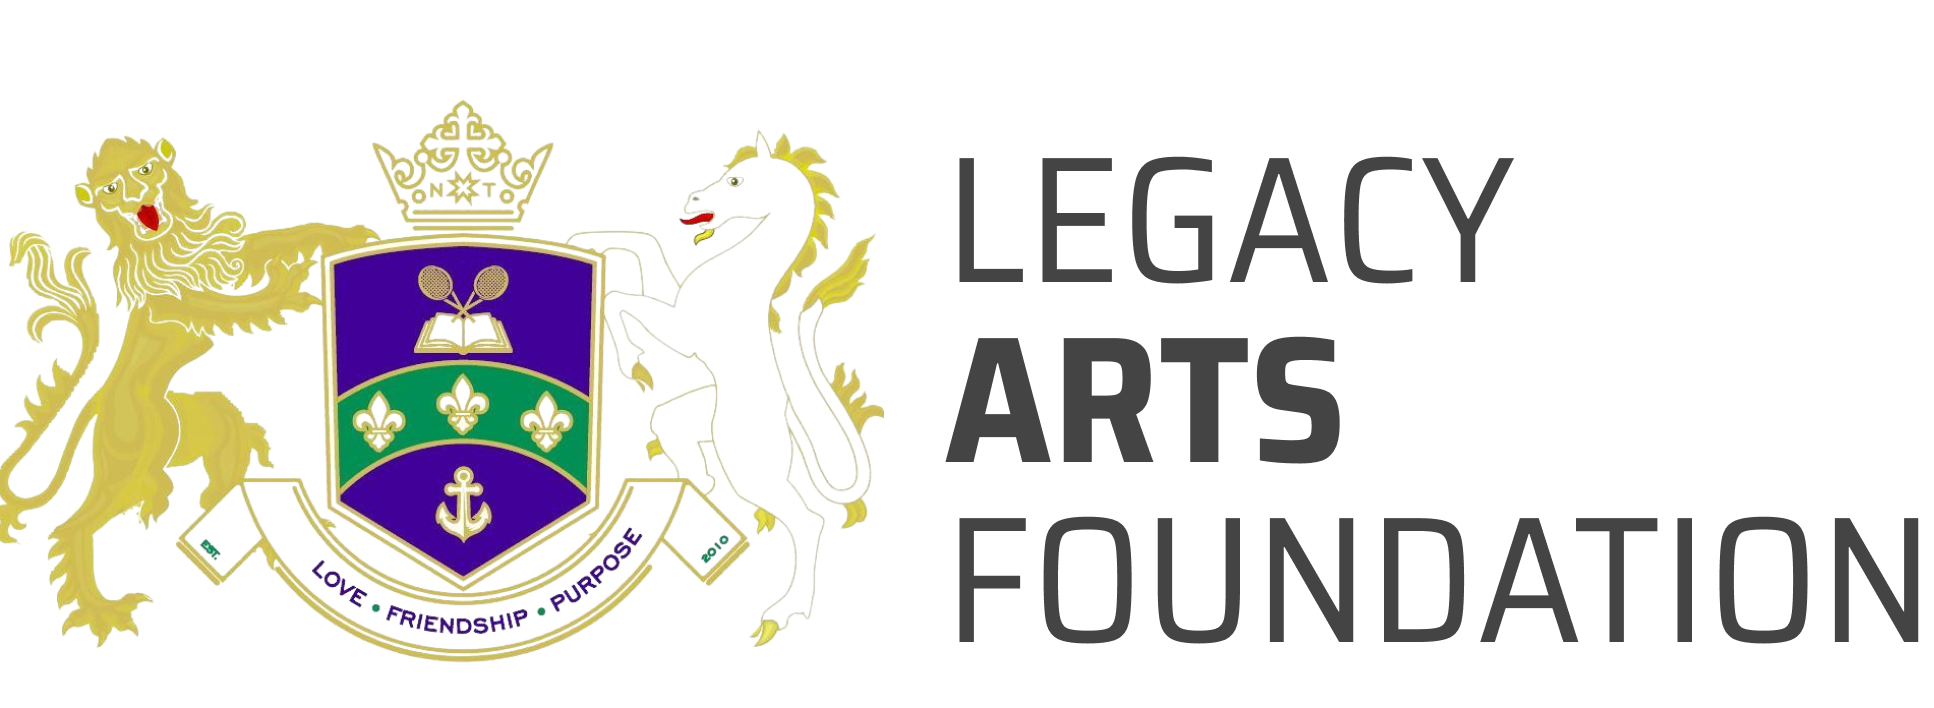 Legacy Arts Foundation